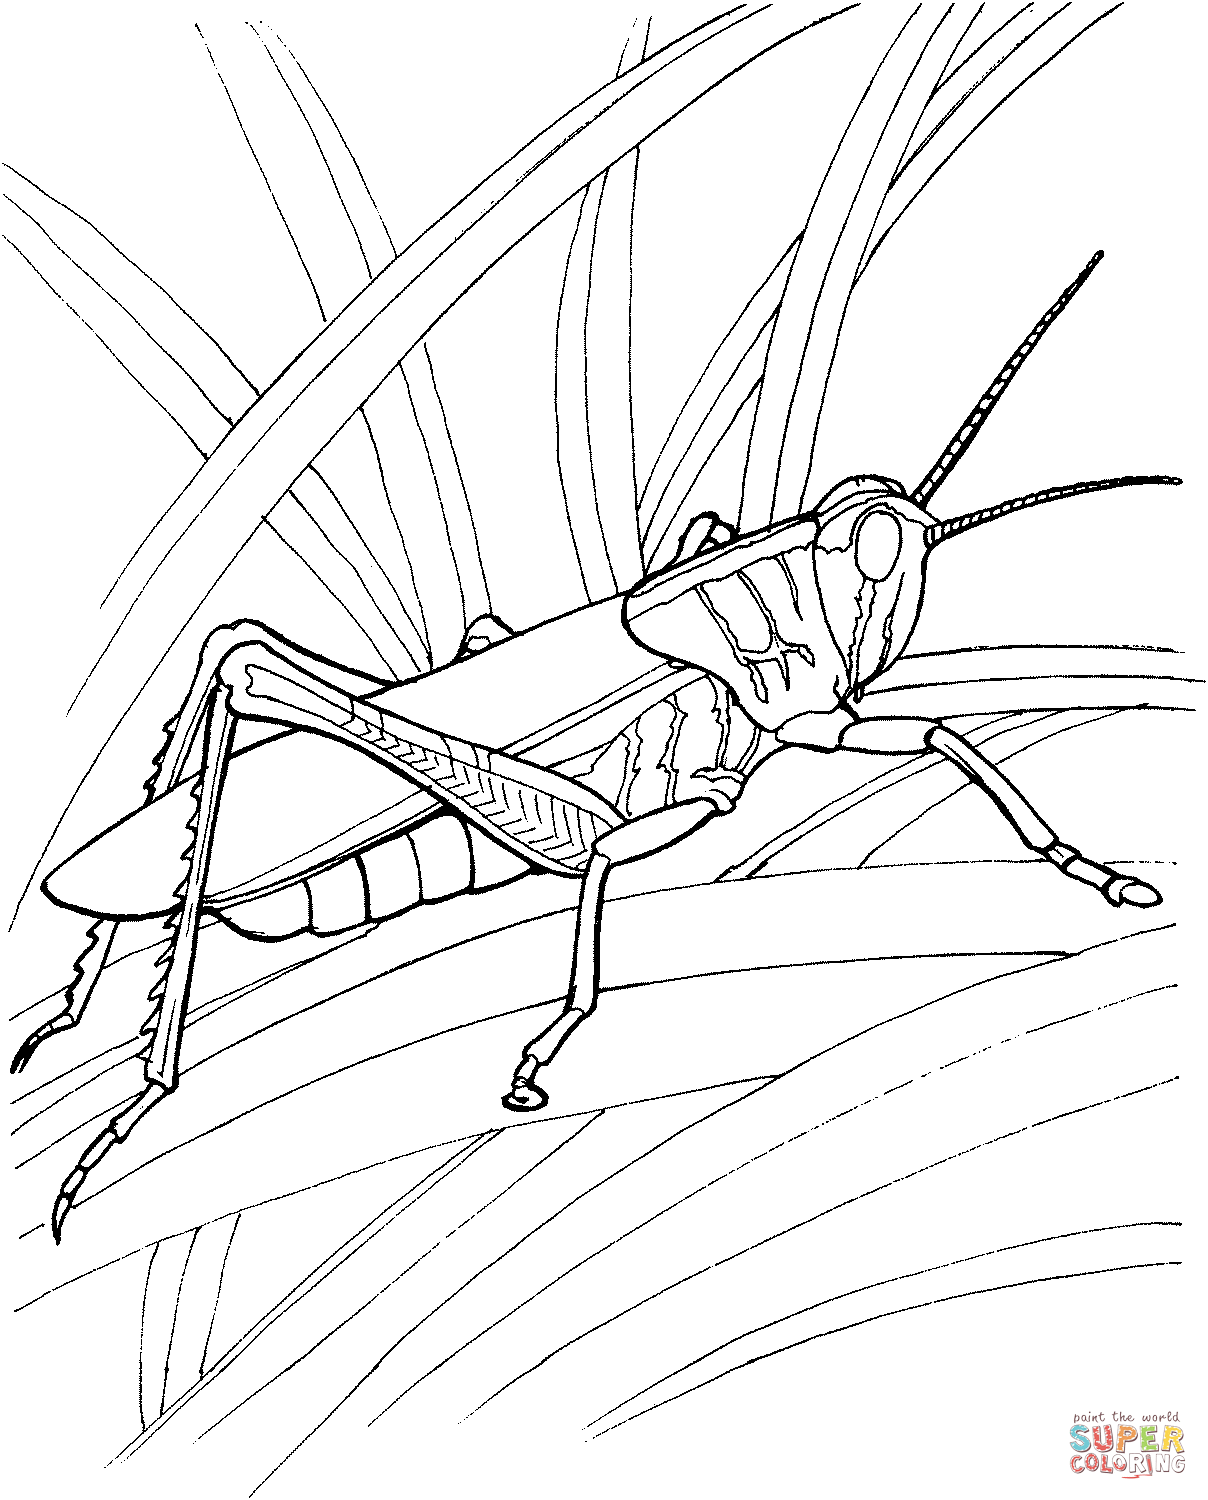 grasshopper-coloring-page-0021-q1